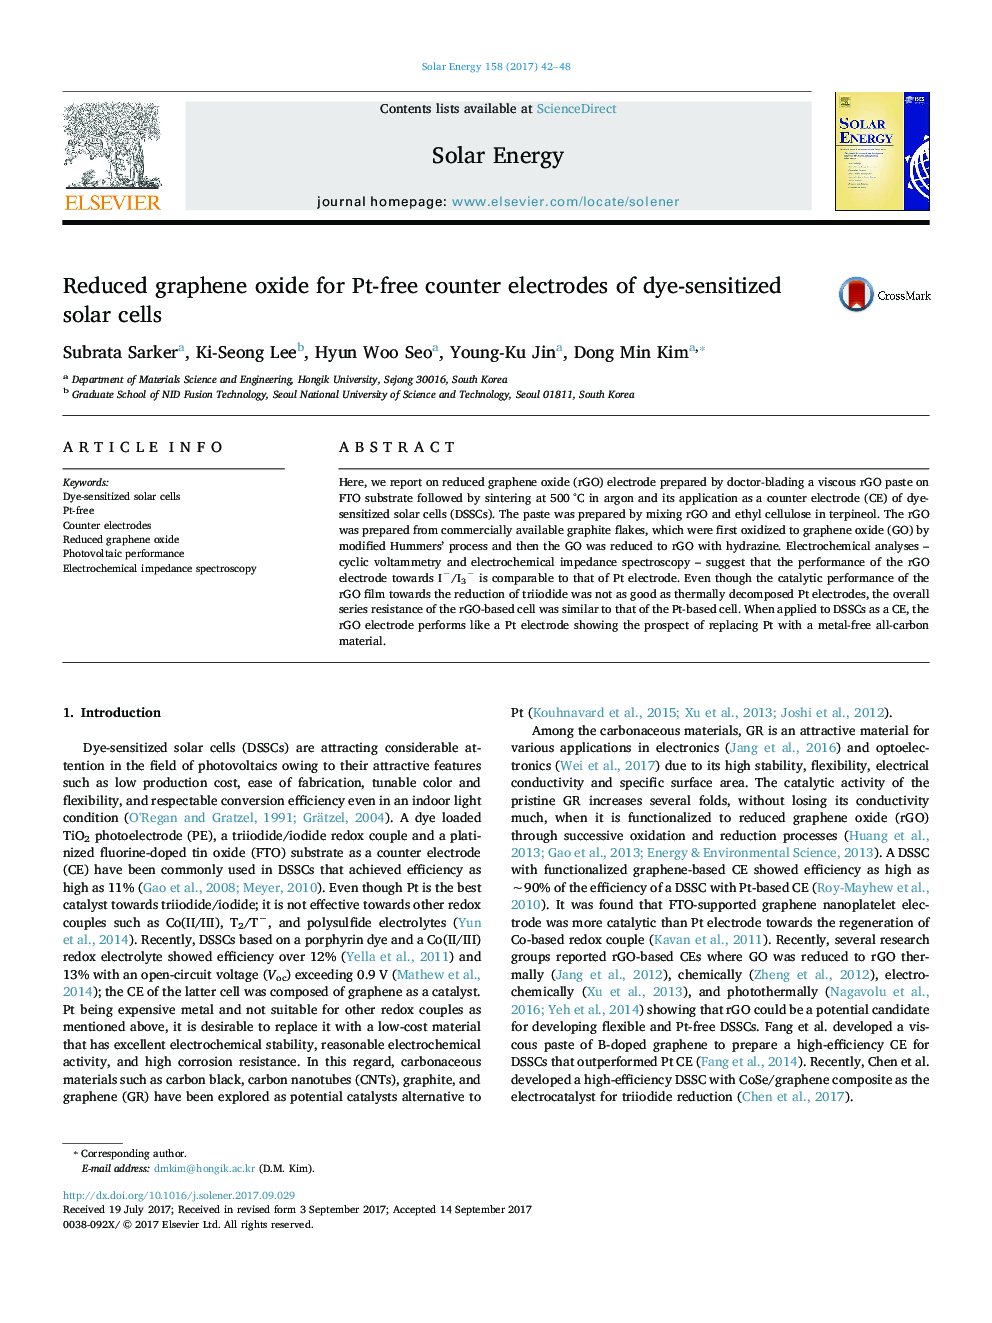 Reduced graphene oxide for Pt-free counter electrodes of dye-sensitized solar cells